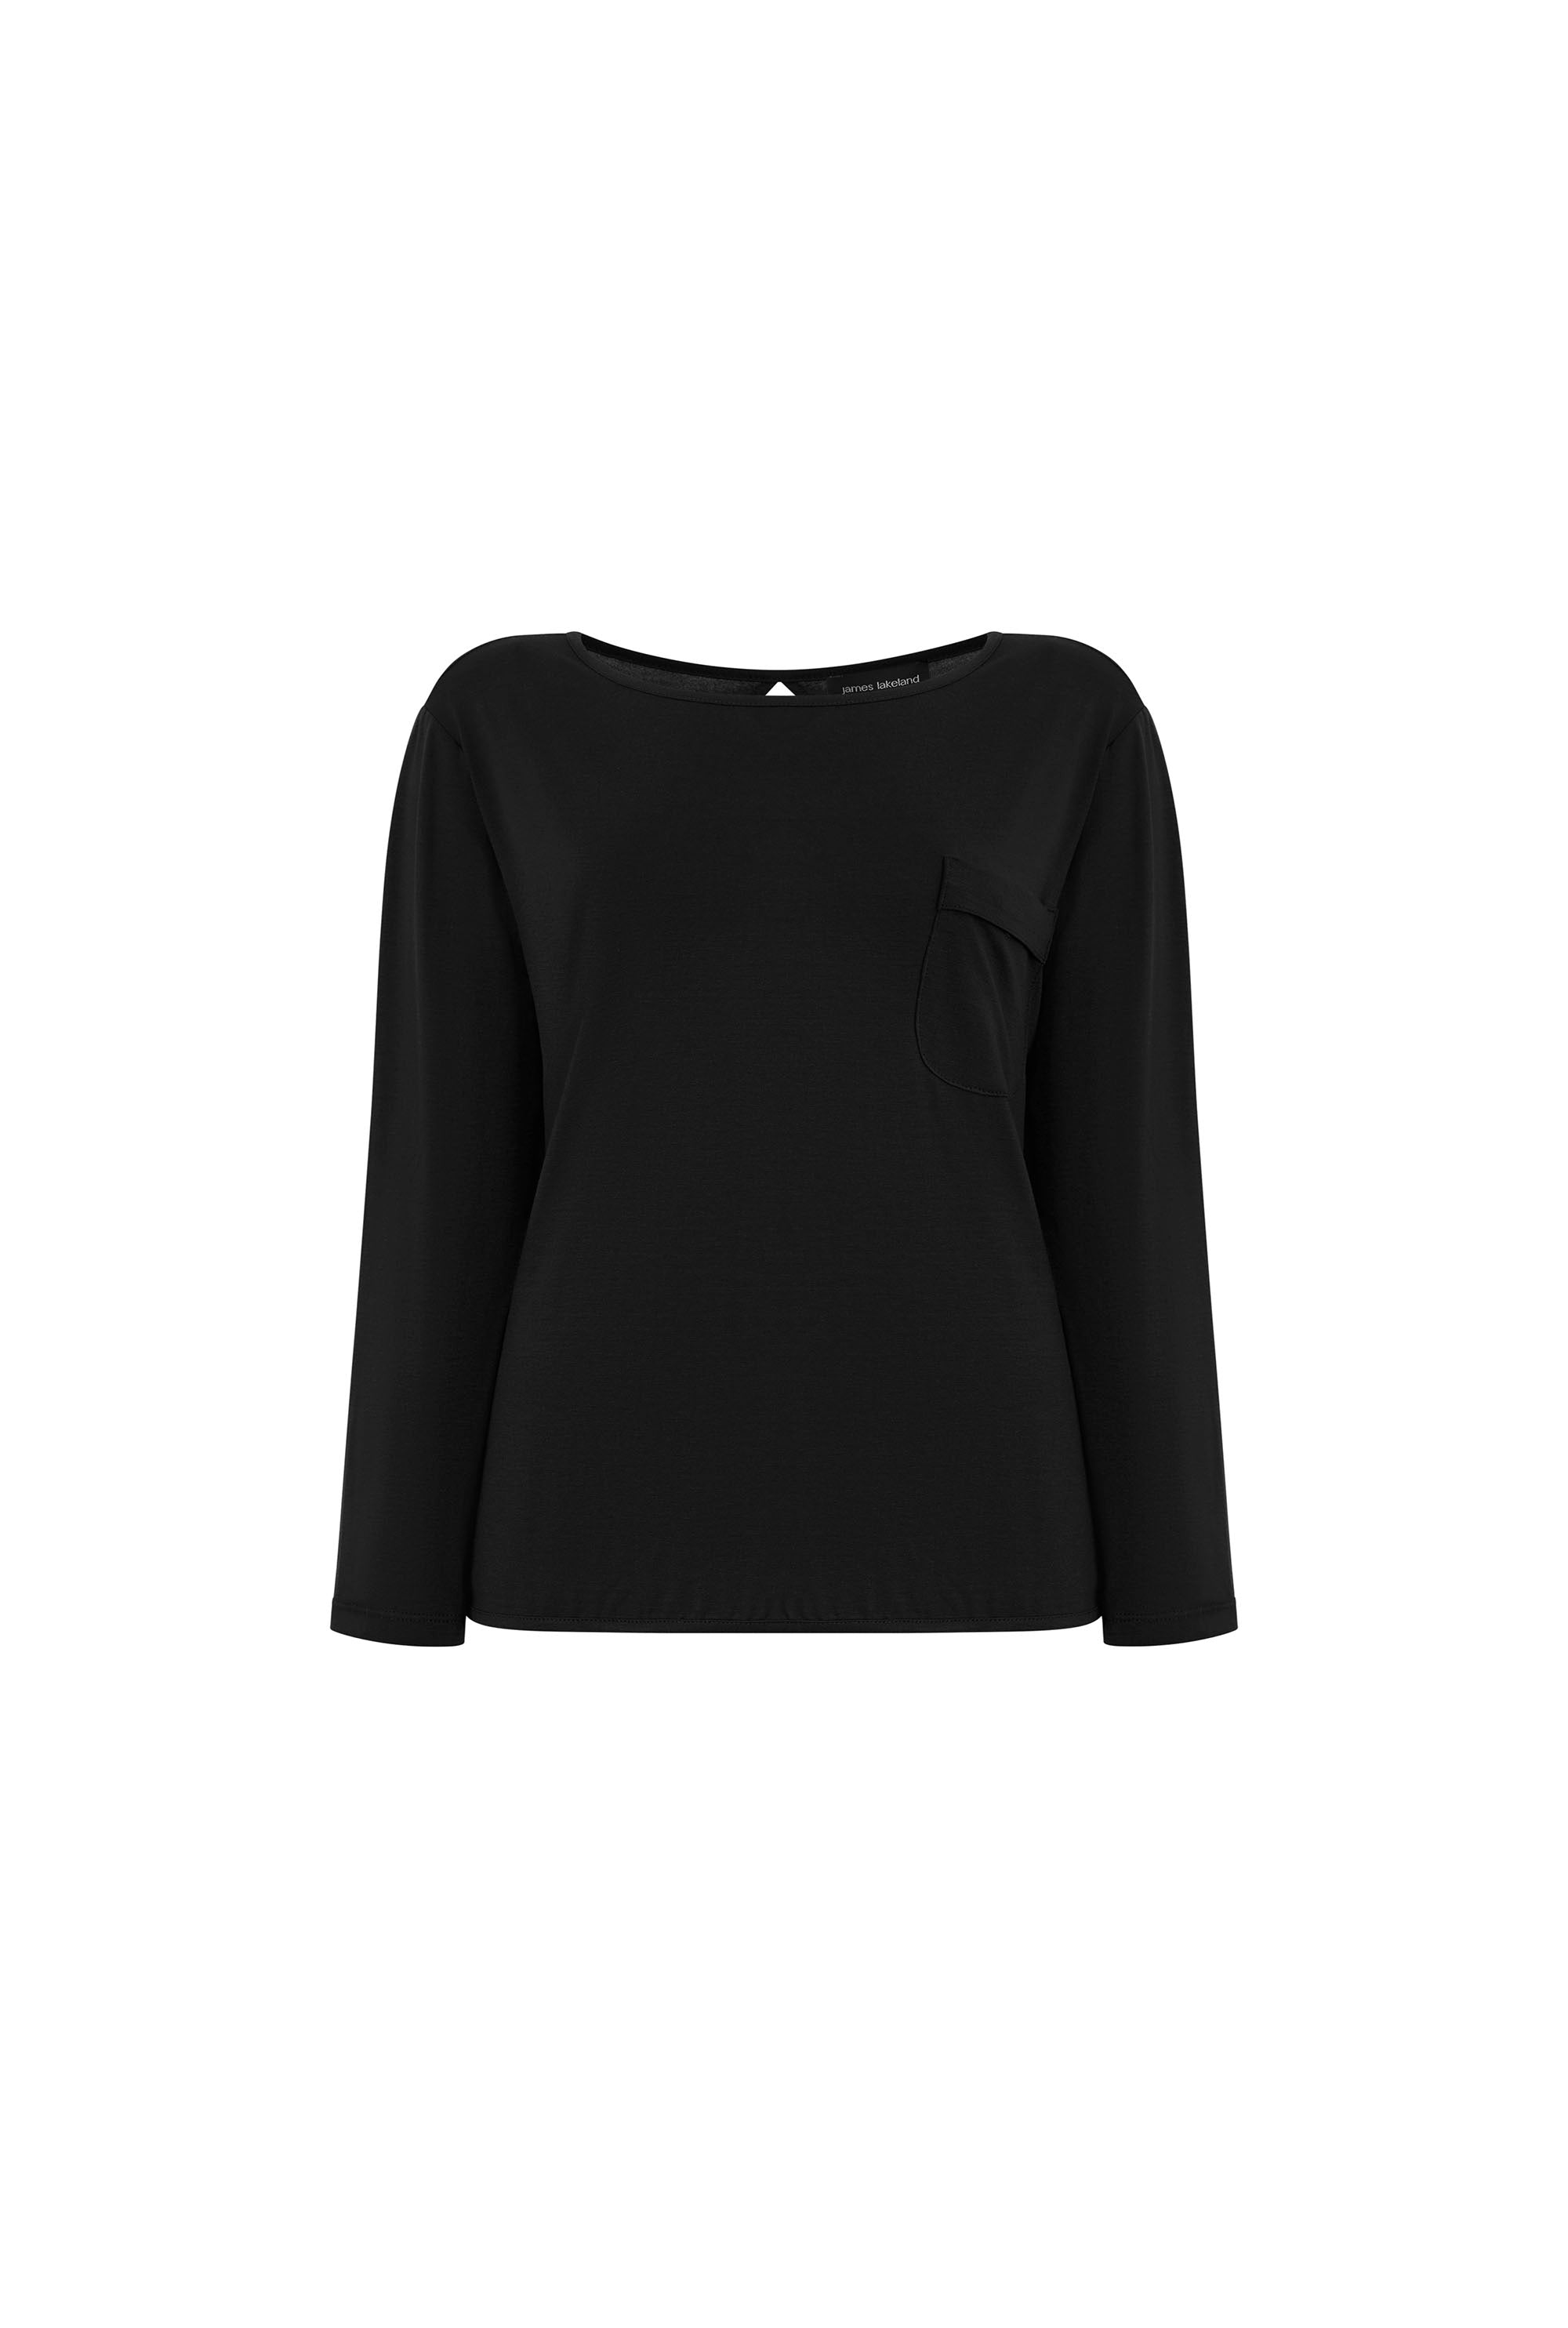 James Lakeland Women's Pocket Jersey T-shirt Black